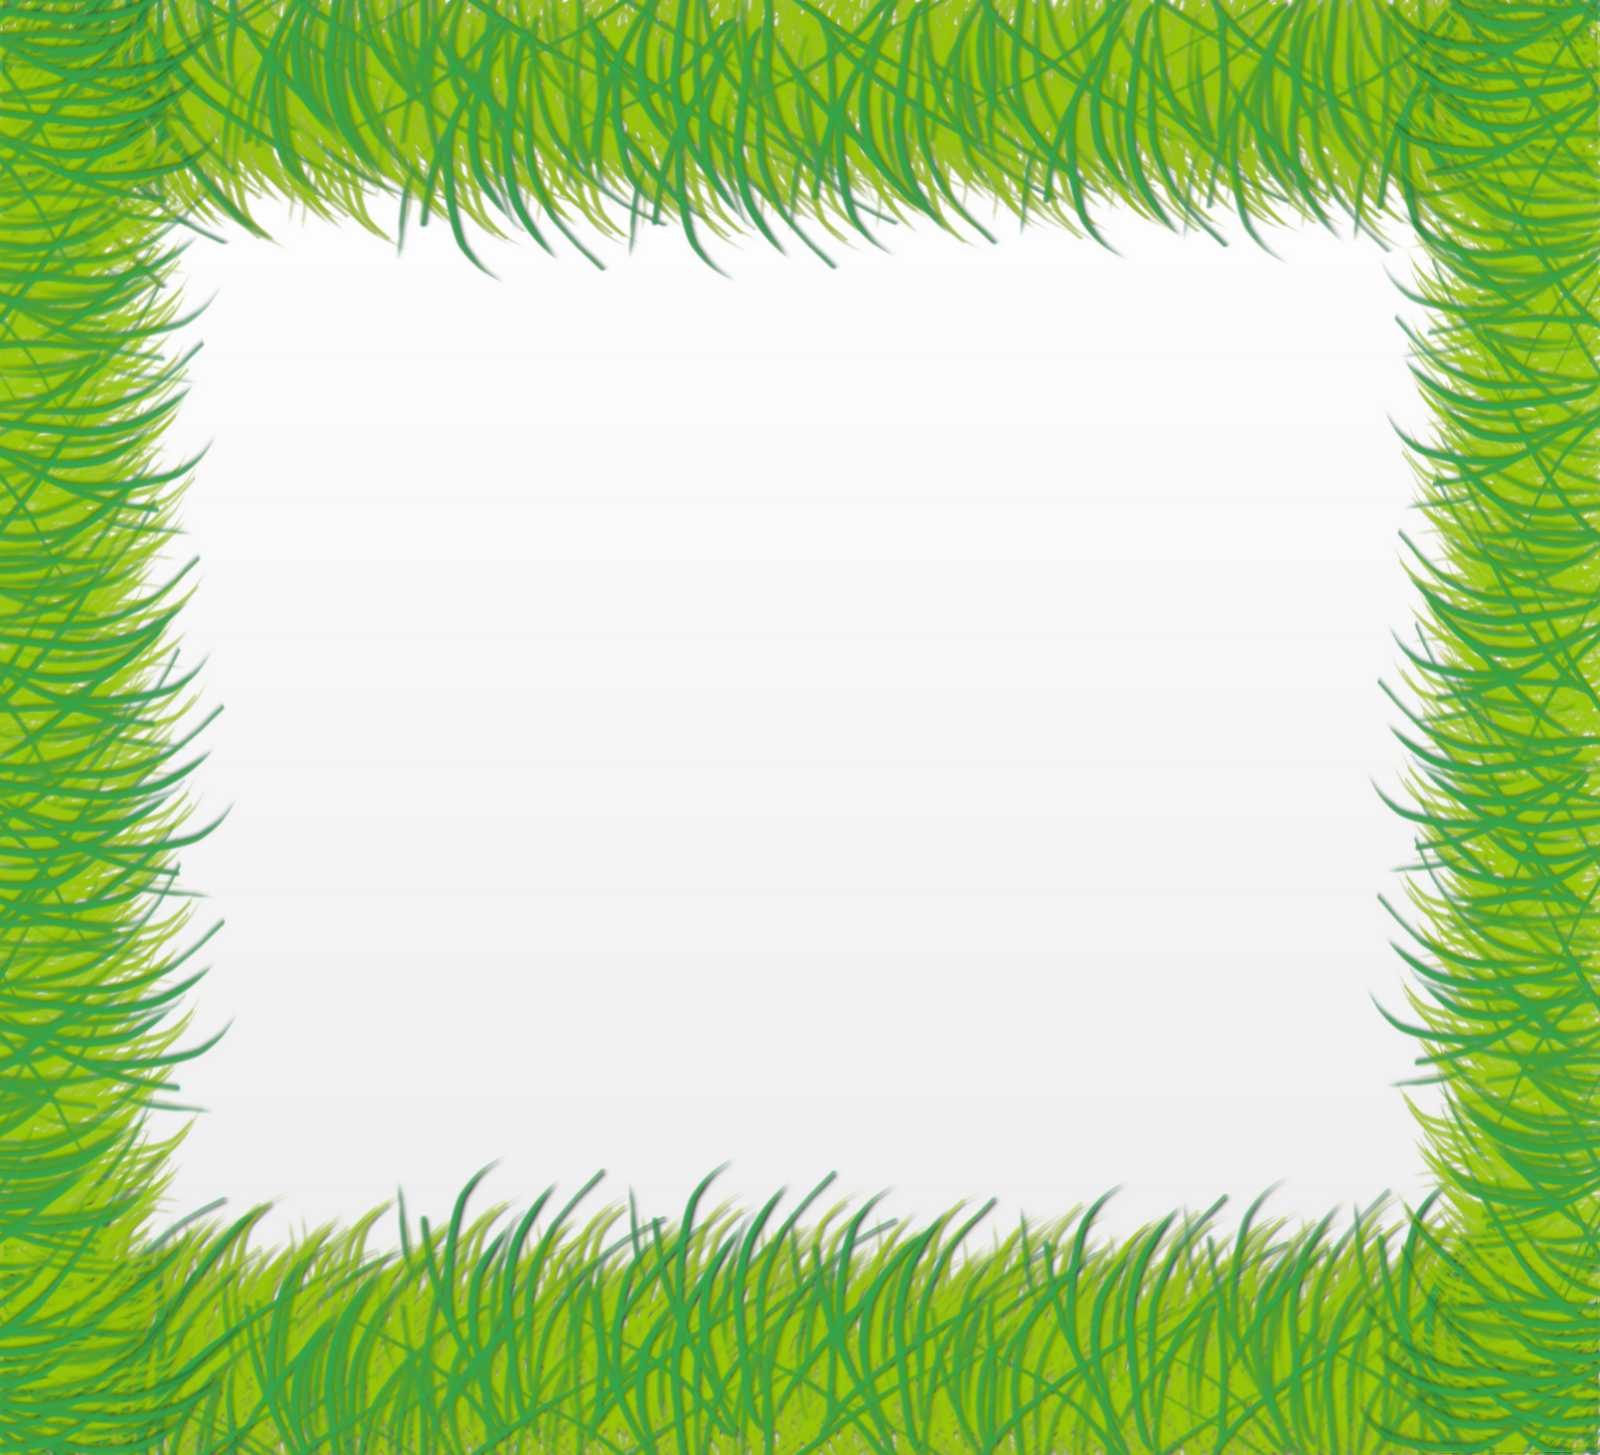 free clip art grass border - photo #19